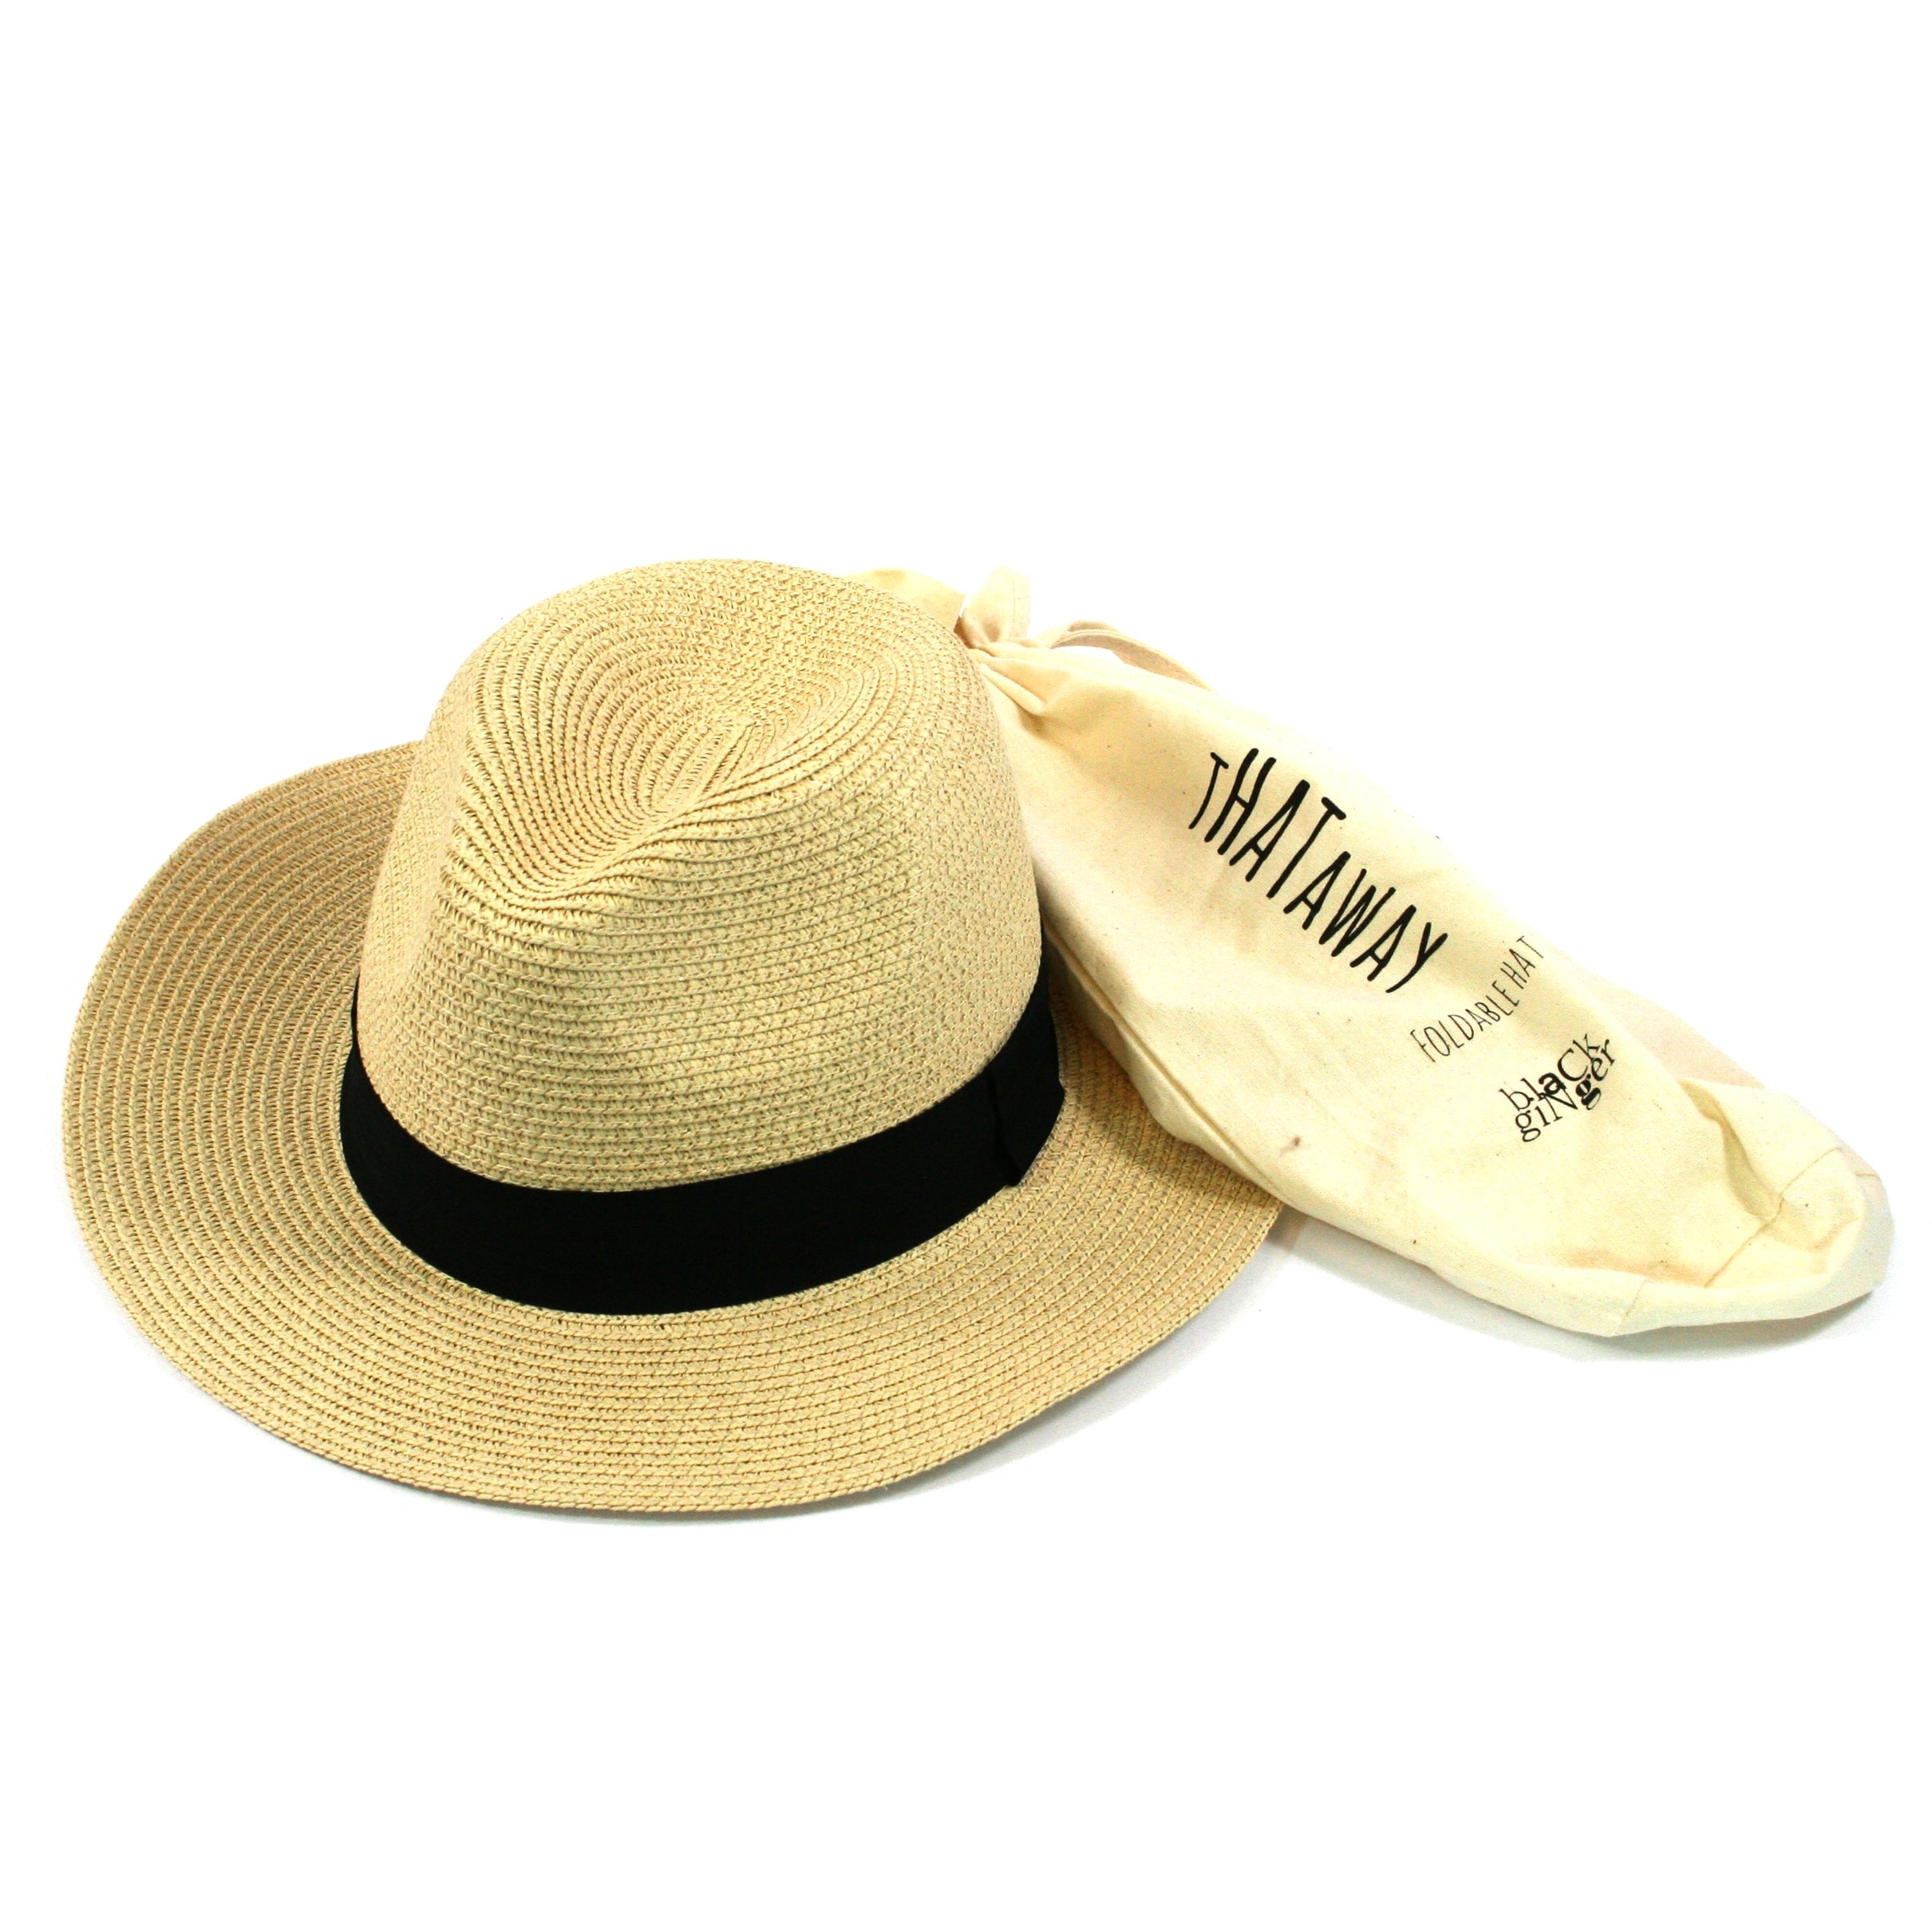 Large Folding Travel Panama Sun Hat (59cm) Large – One Size Fits All Design – The Scarf Giraffe